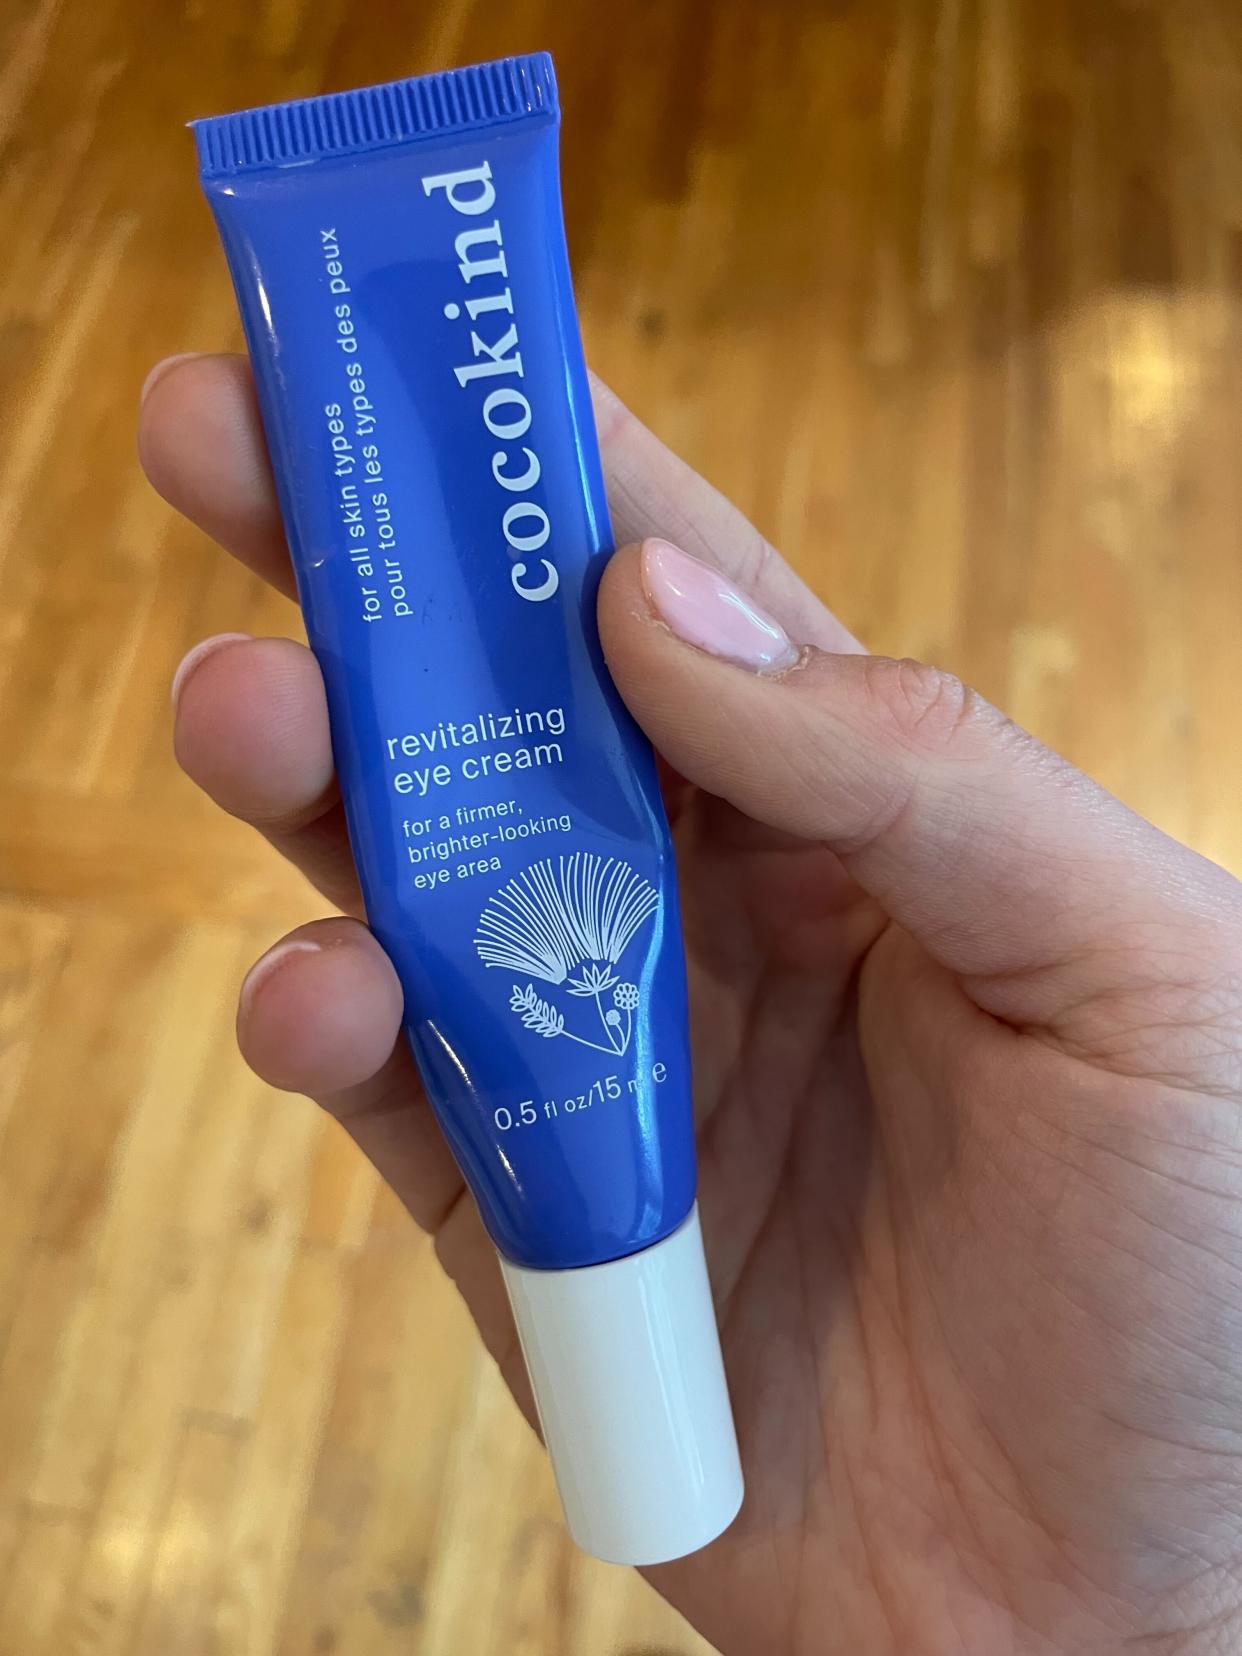 Zoe Malin added this eye cream to her daily skin care routine. (Zoe Malin)